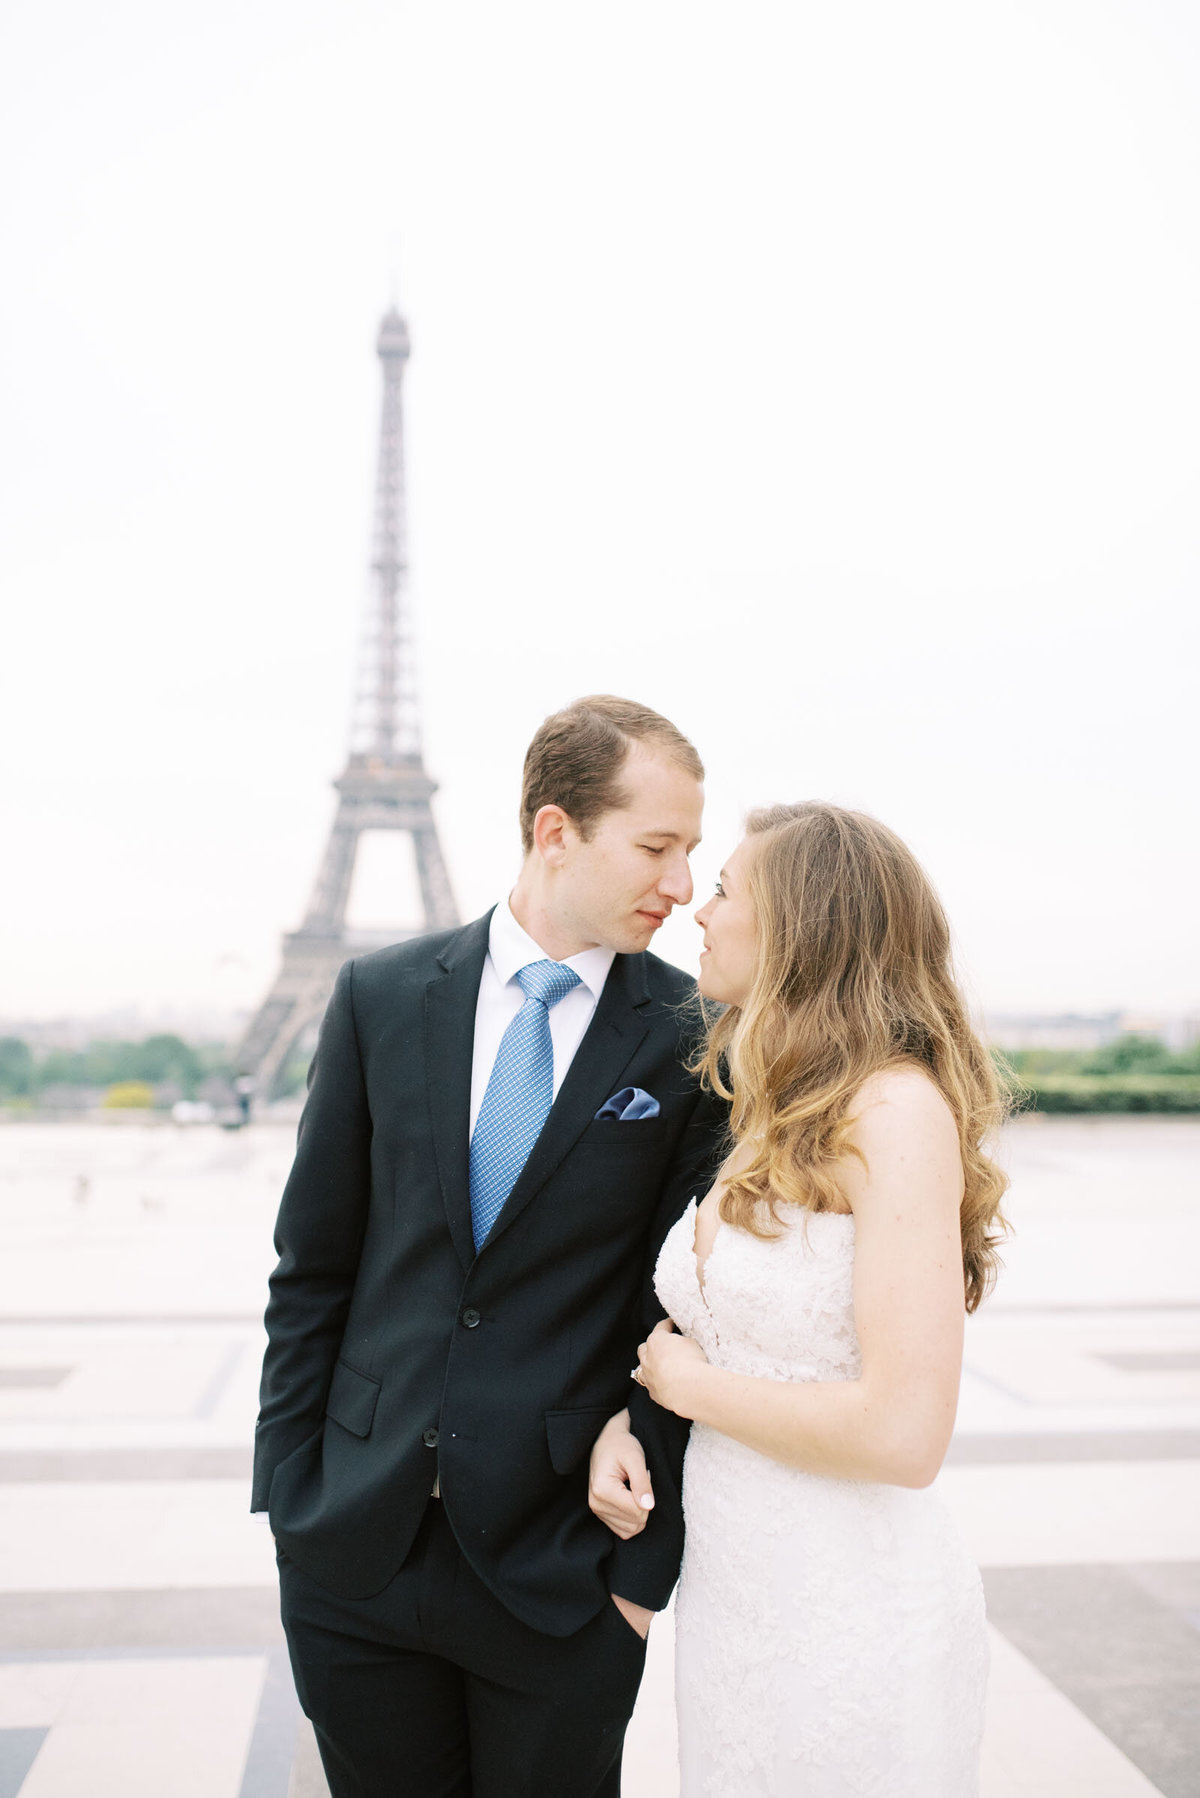 marcelaploskerphotography-paris_wedding-78